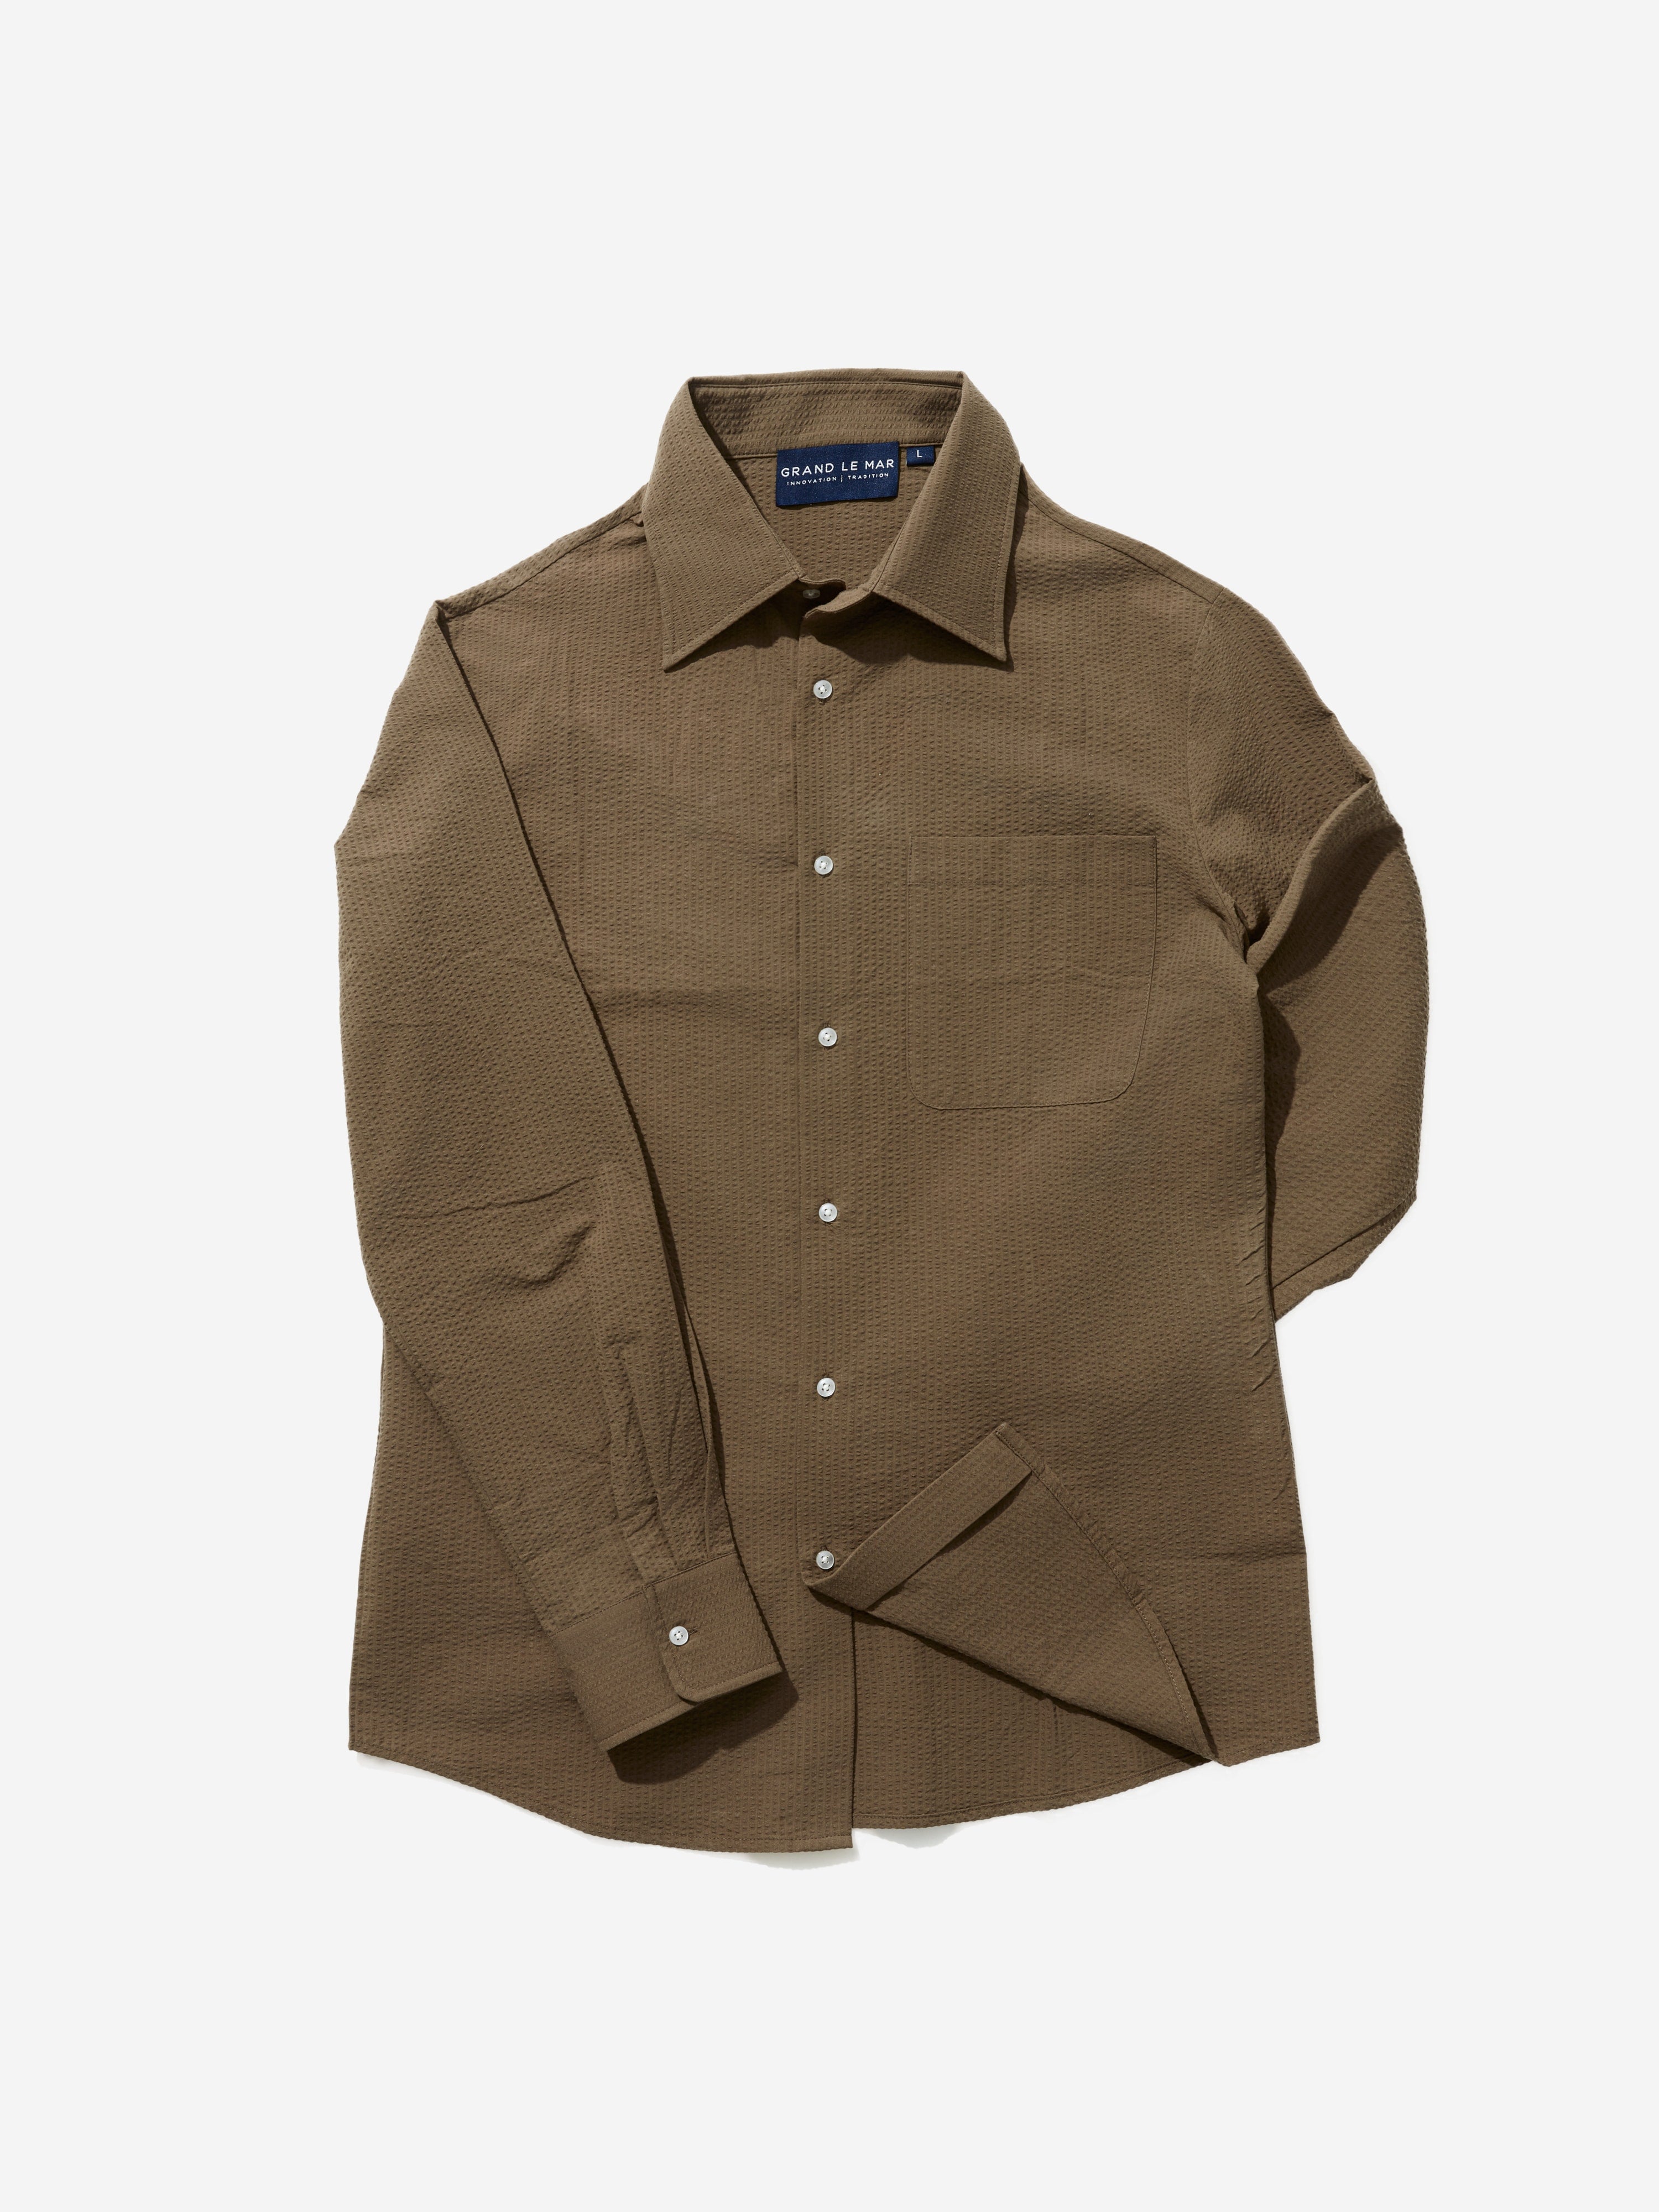 Brown Seersucker Shirt - Grand Le Mar